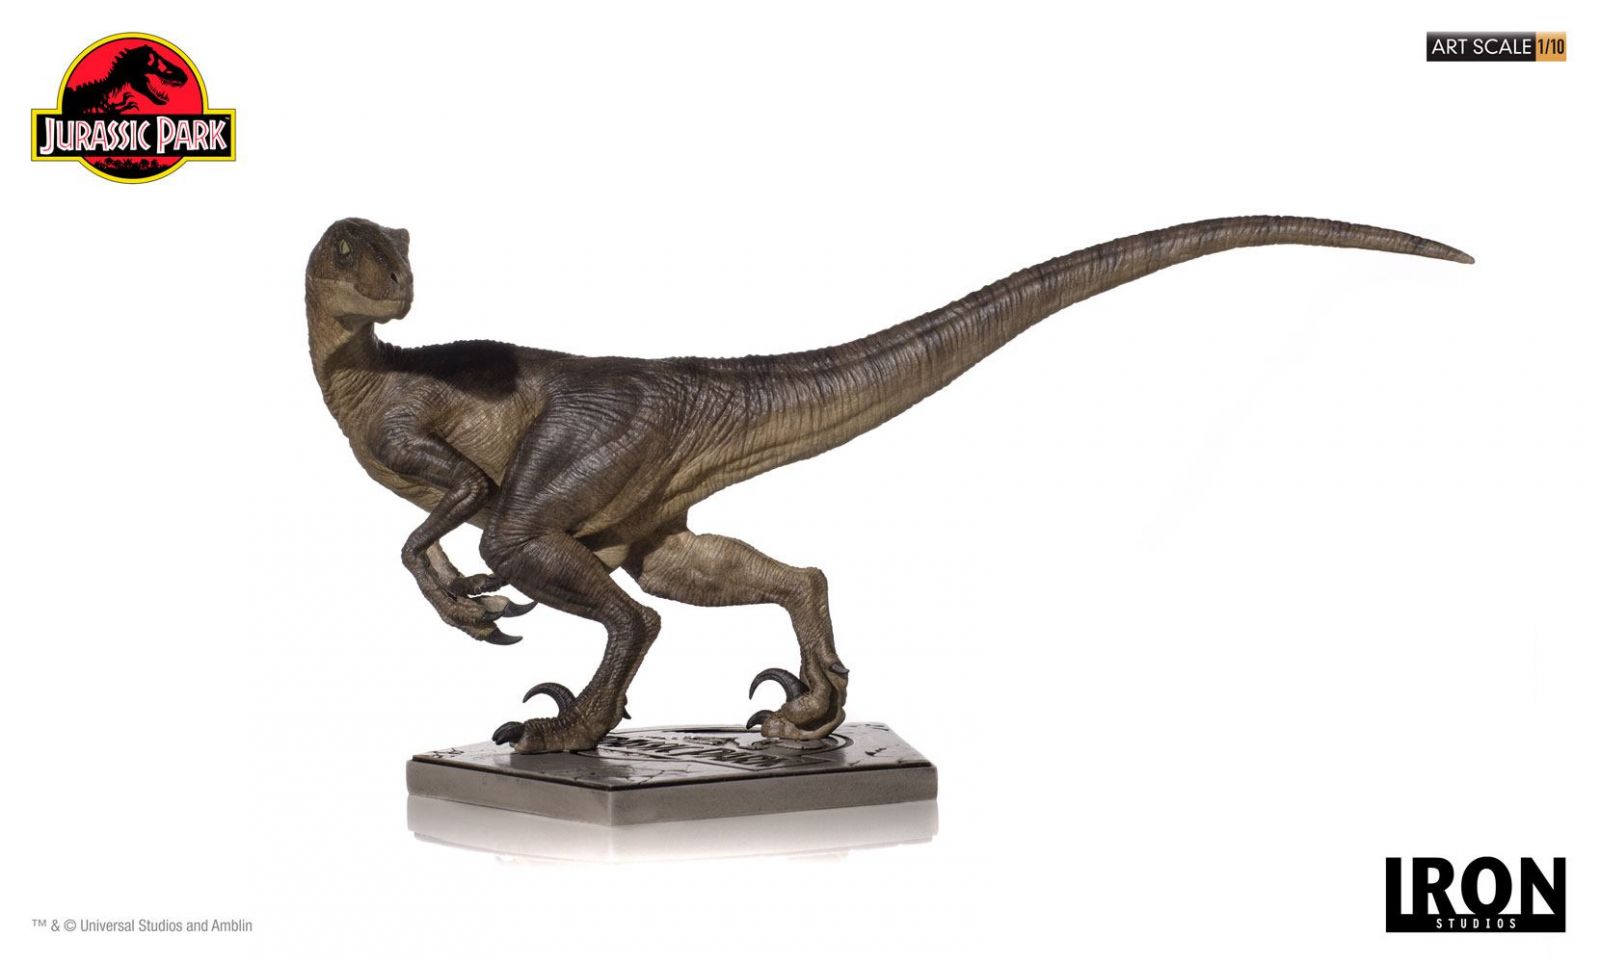 Jurassic Park Art Scale Soška 1/10 Velociraptor 29 cm Iron Studios